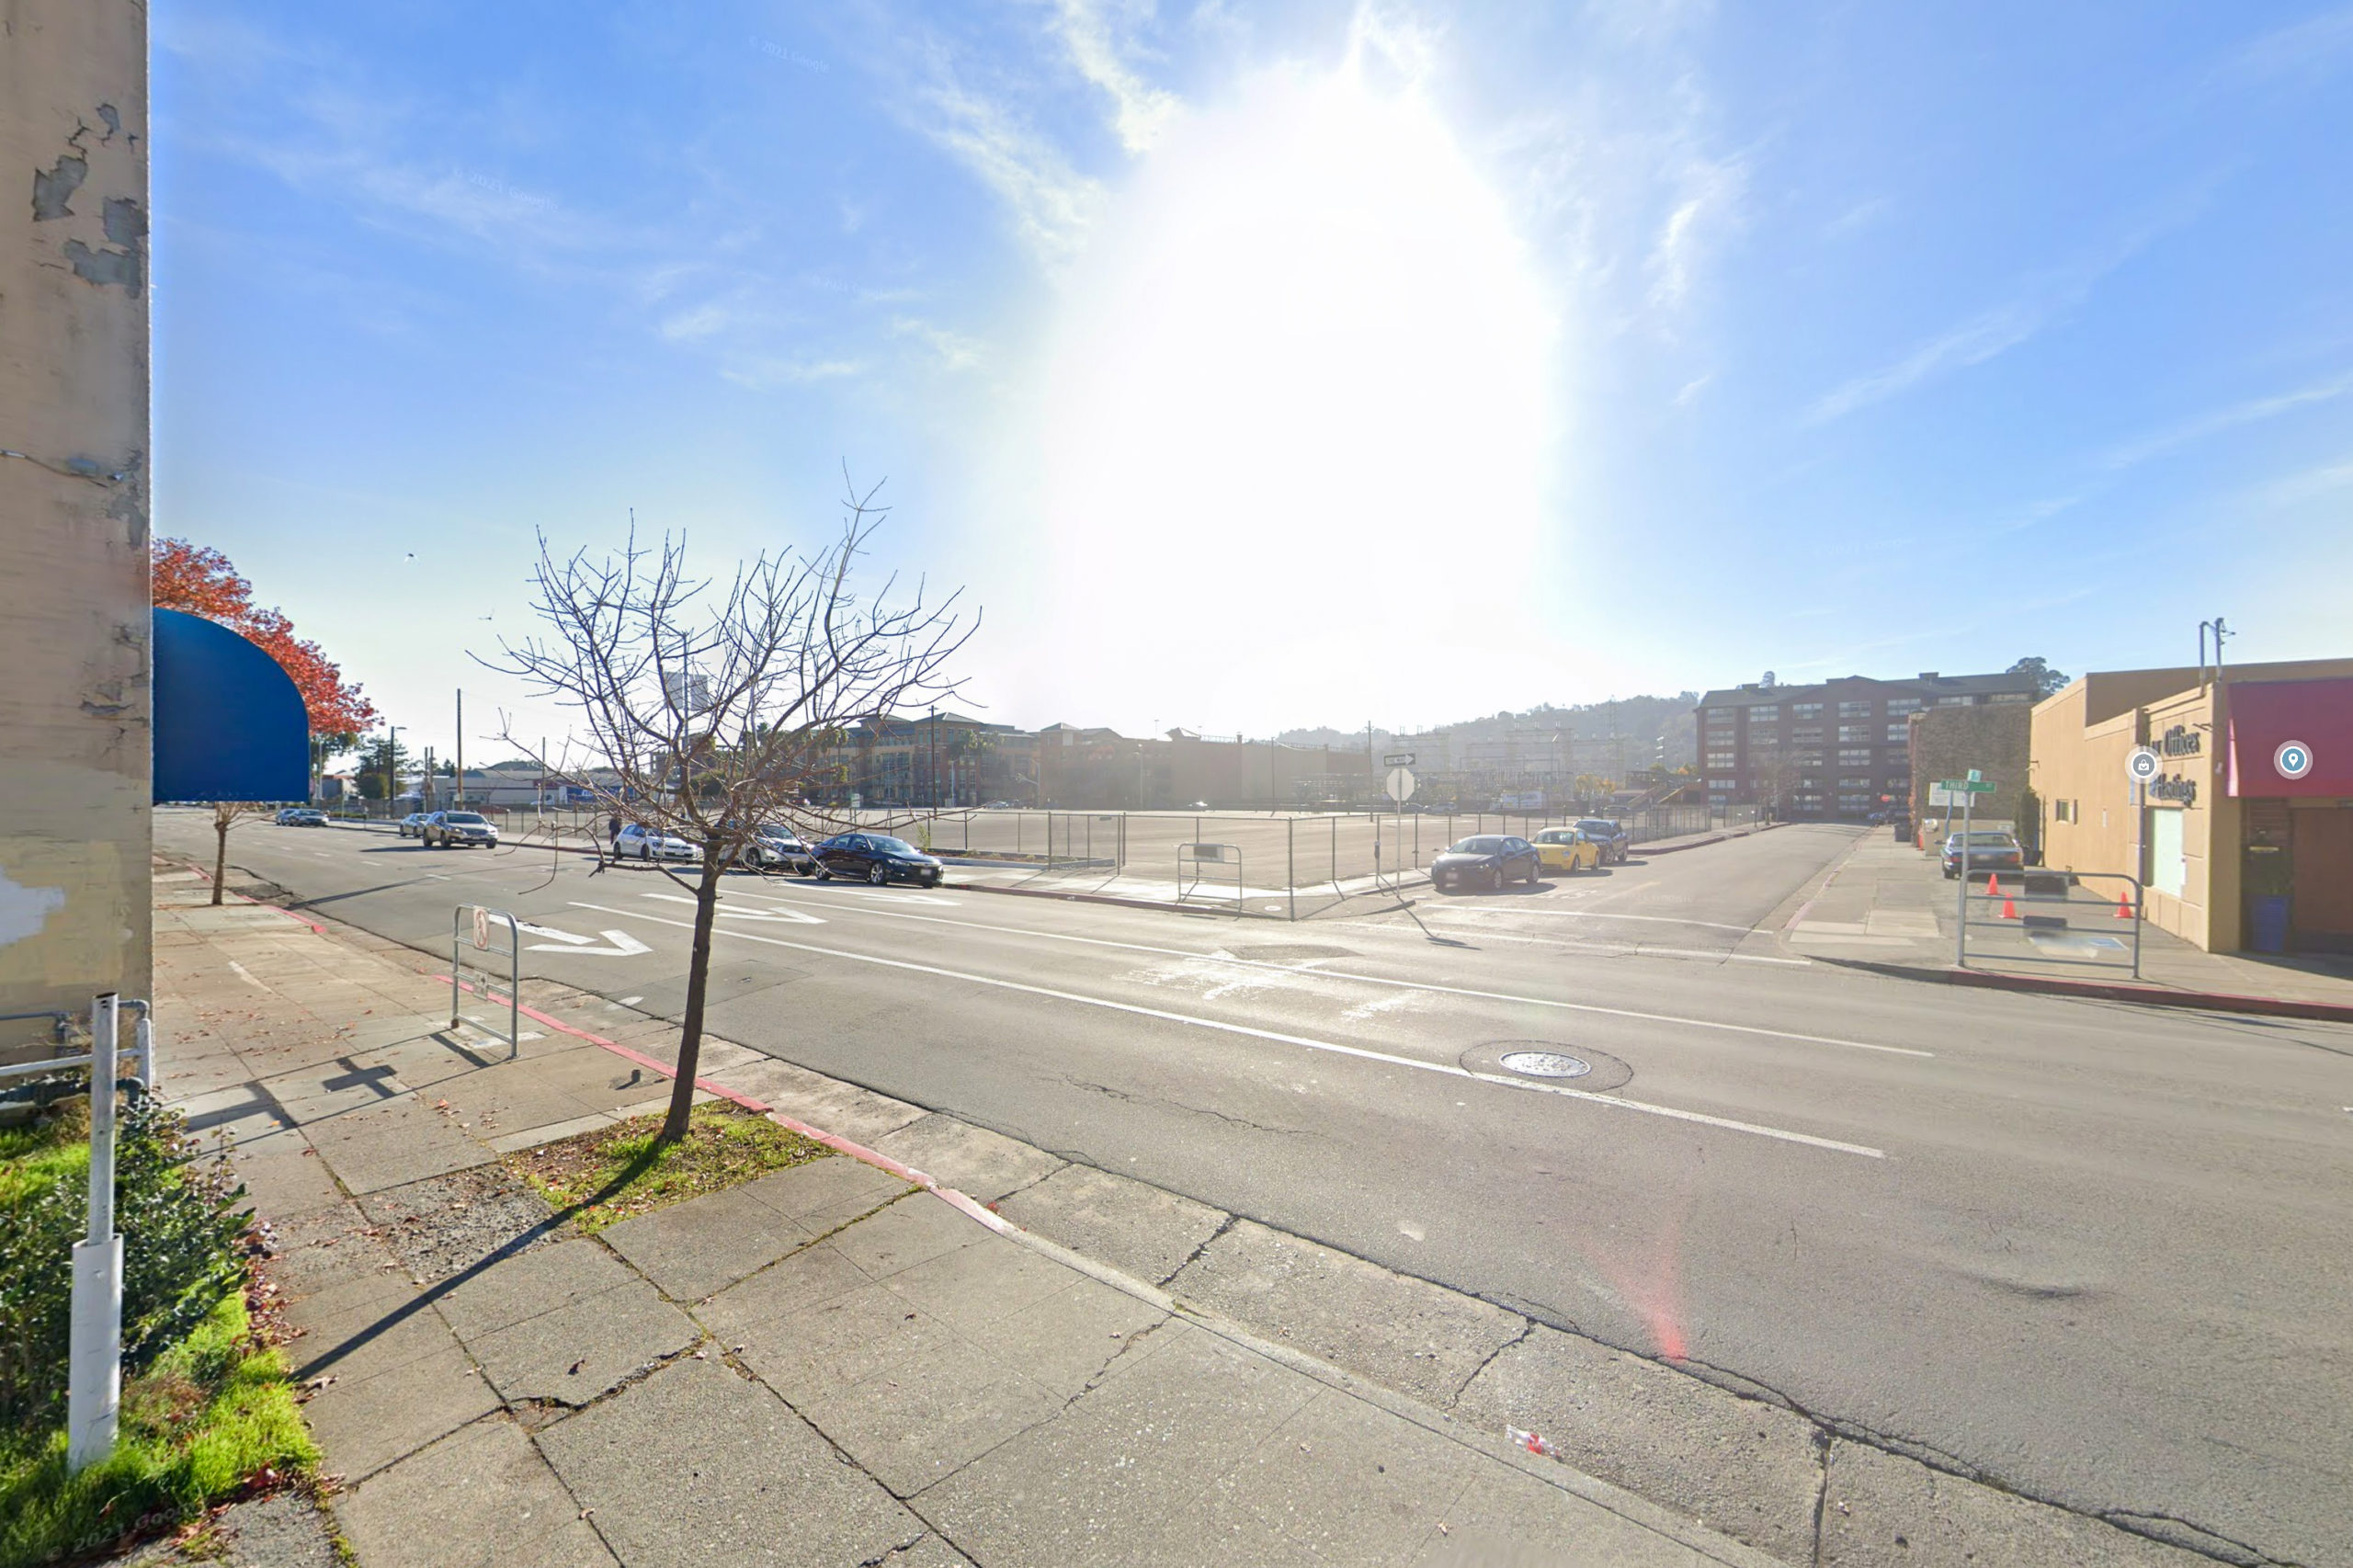 999 Third Street condition prior to construction starting, image via Google Street View circa December 2020